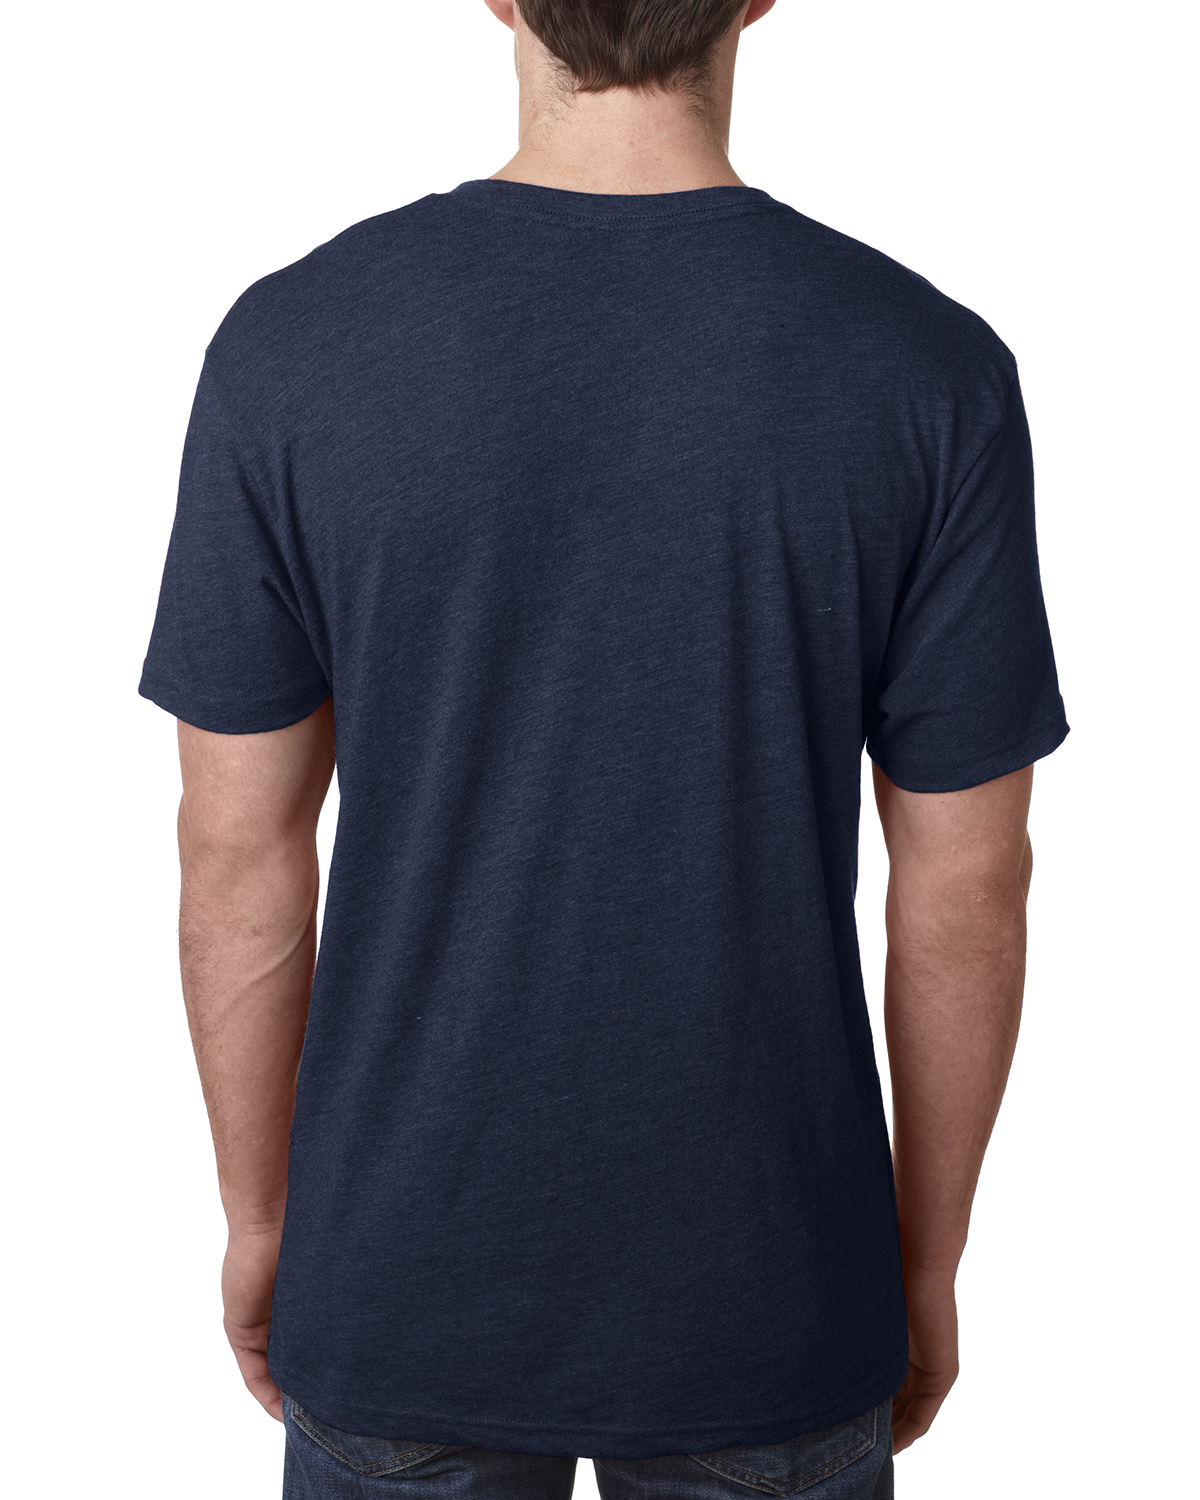 Next Level Men's Preimuim Fit Triblend V-Neck S-XL T-Shirt R-6040 | eBay